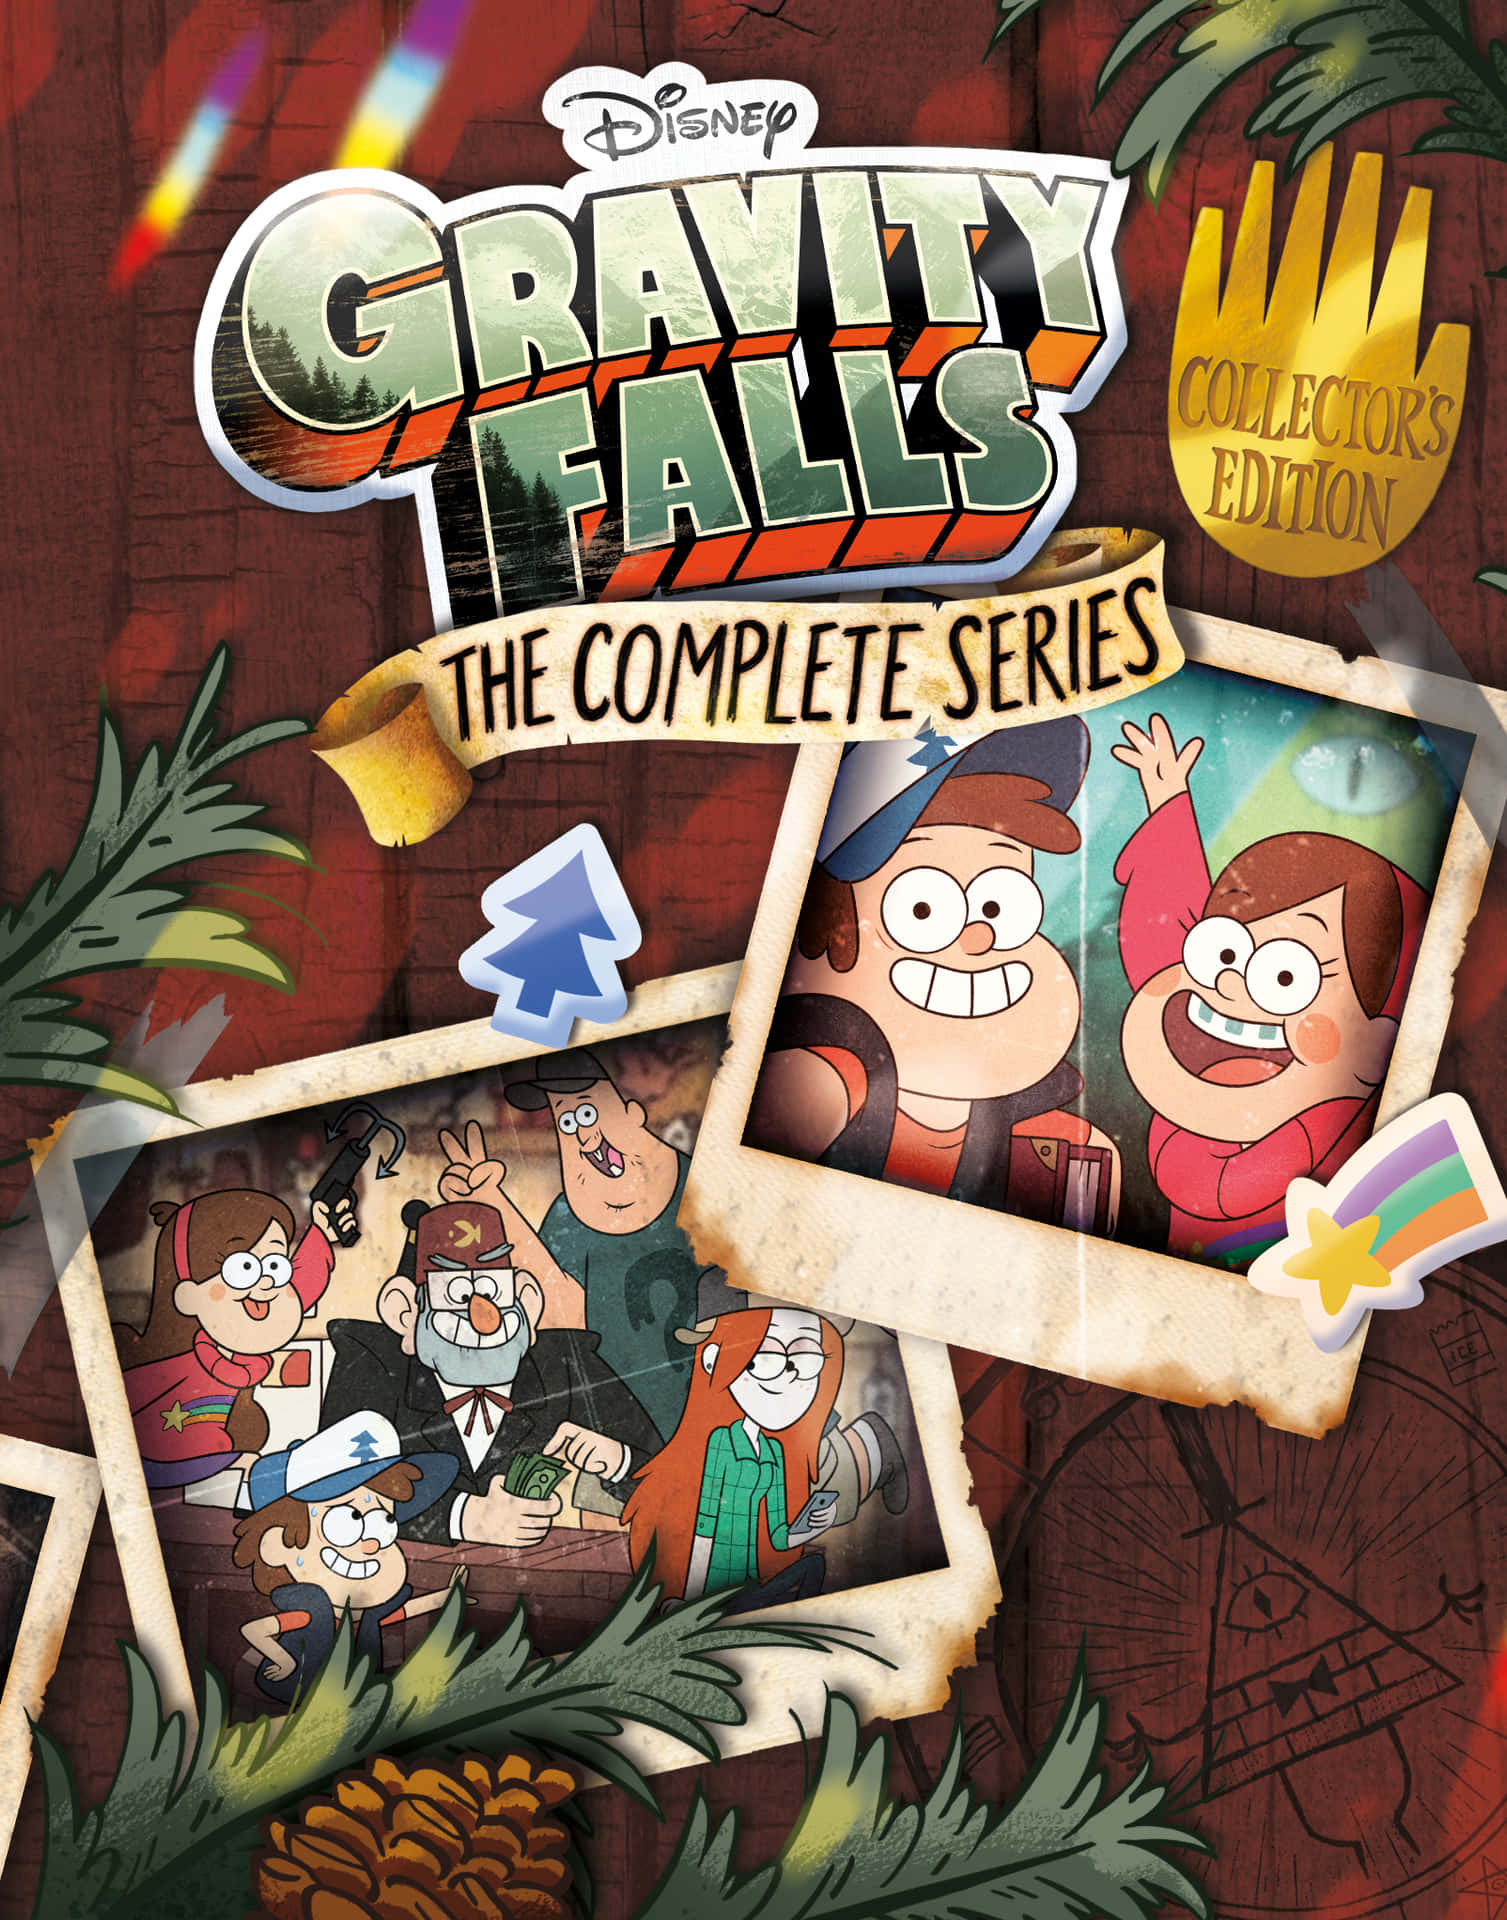 Willkommenin Gravity Falls!